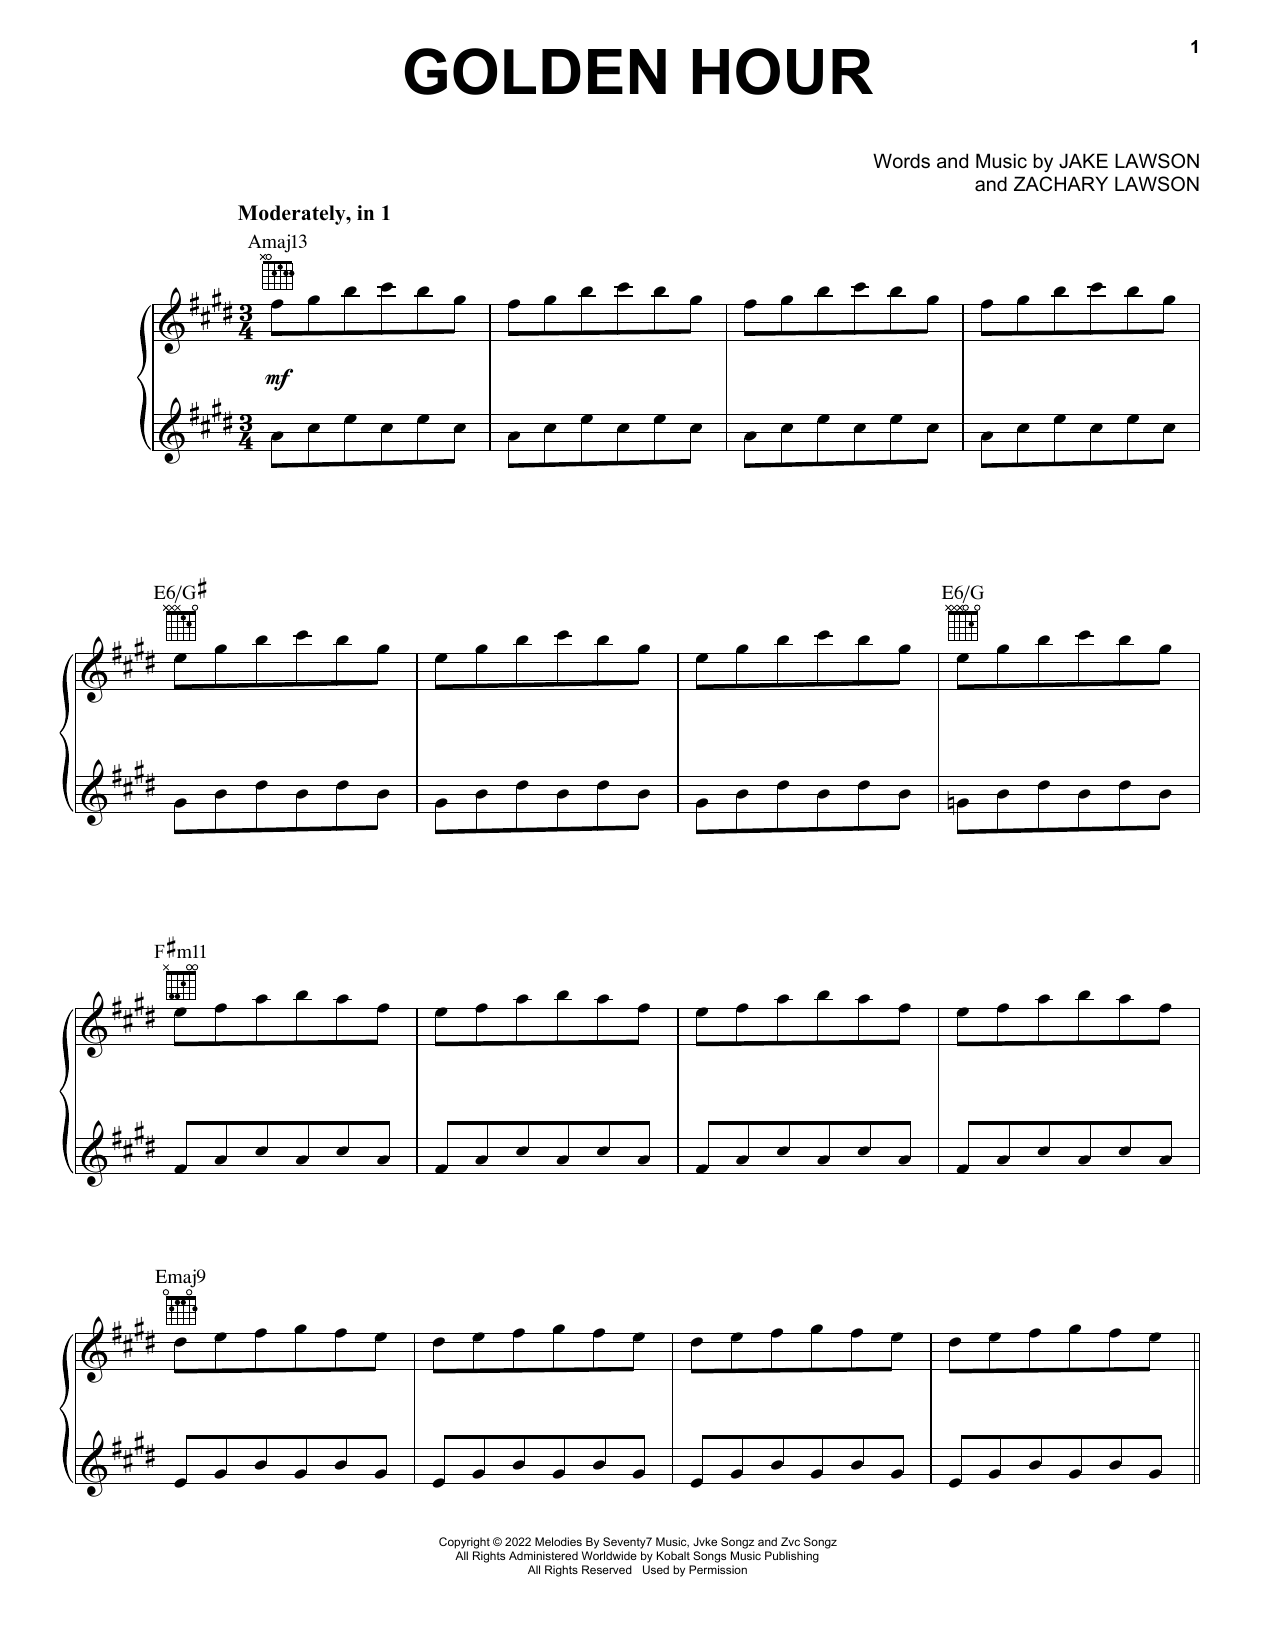 JVKE Golden Hour sheet music notes and chords. Download Printable PDF.